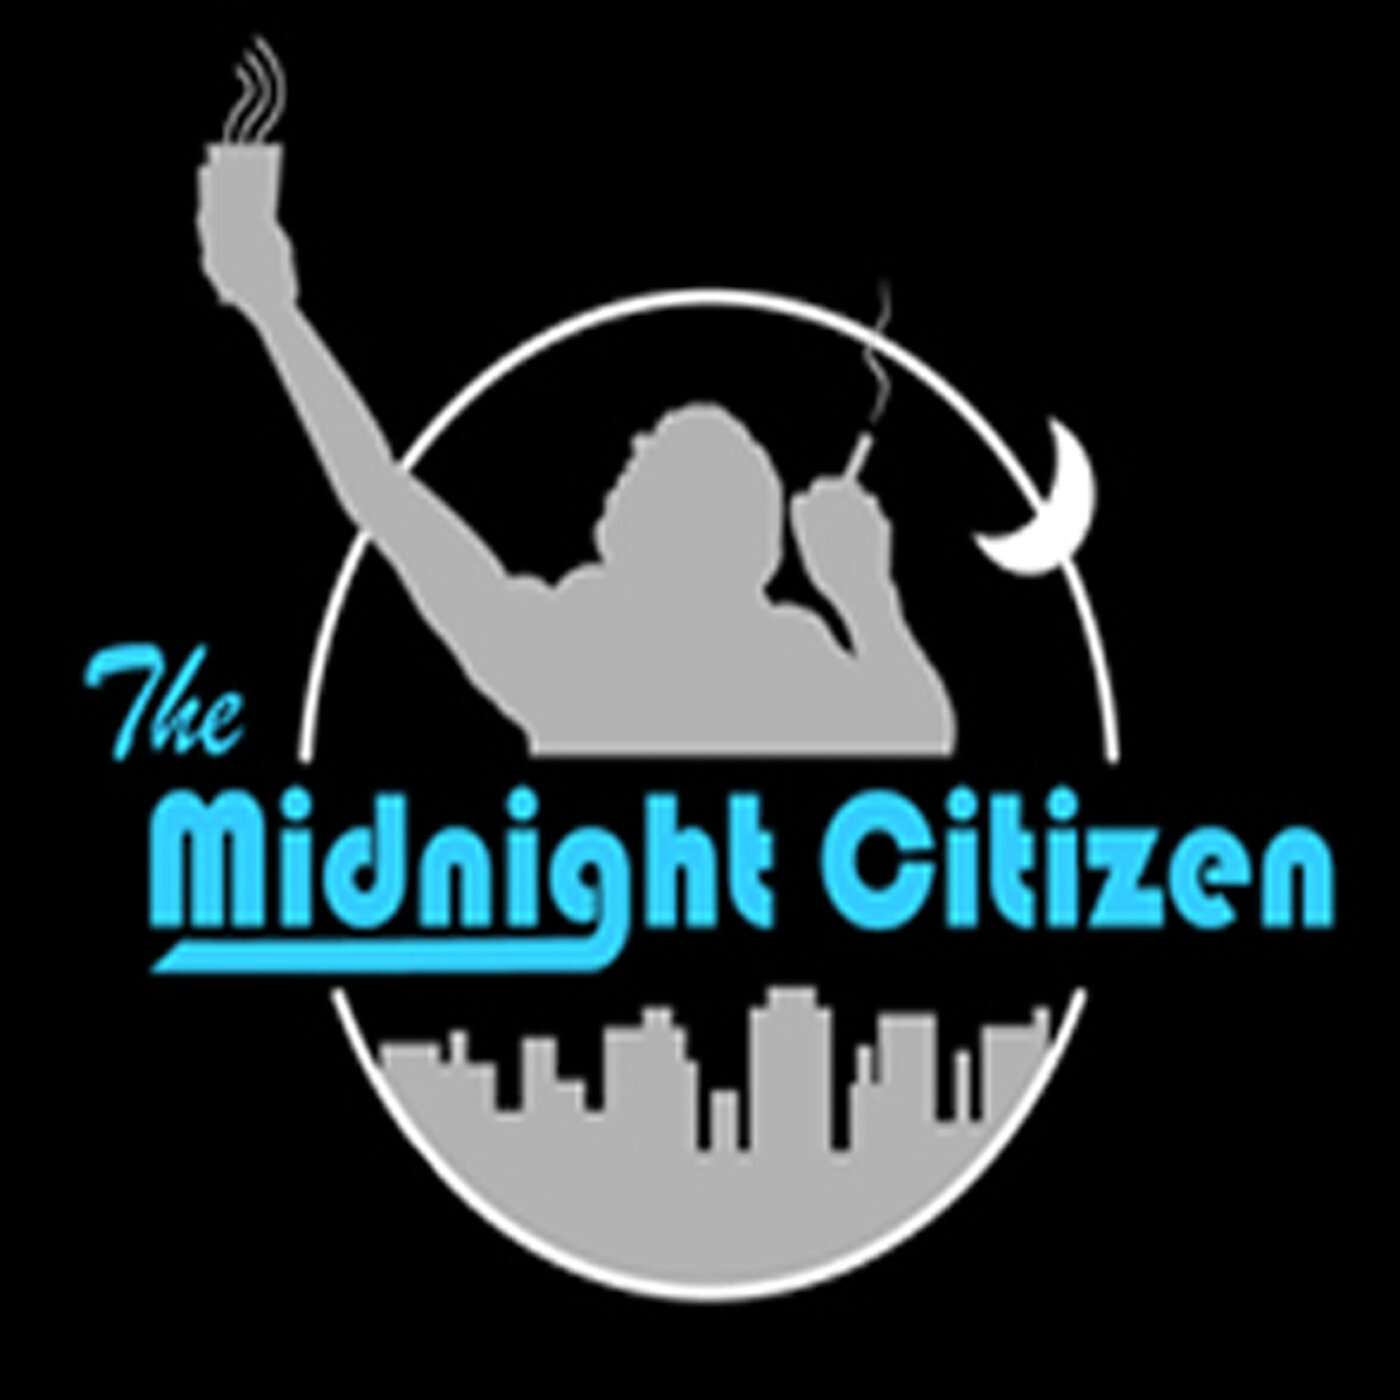 The Midnight Citizen